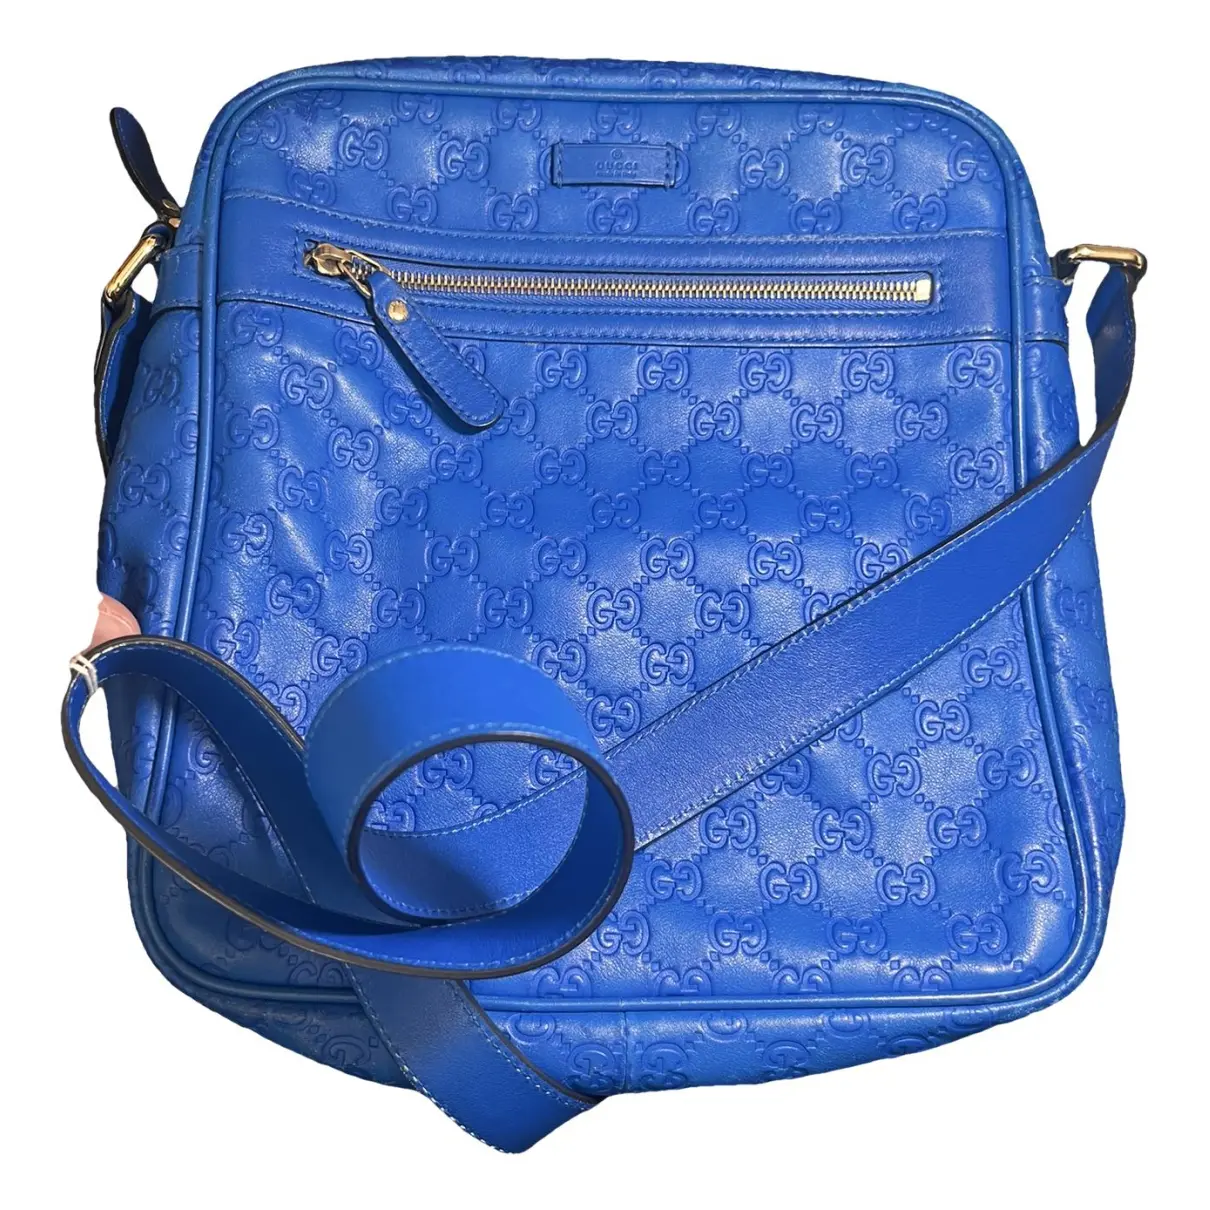 GG Marmont Zip Messenger leather crossbody bag